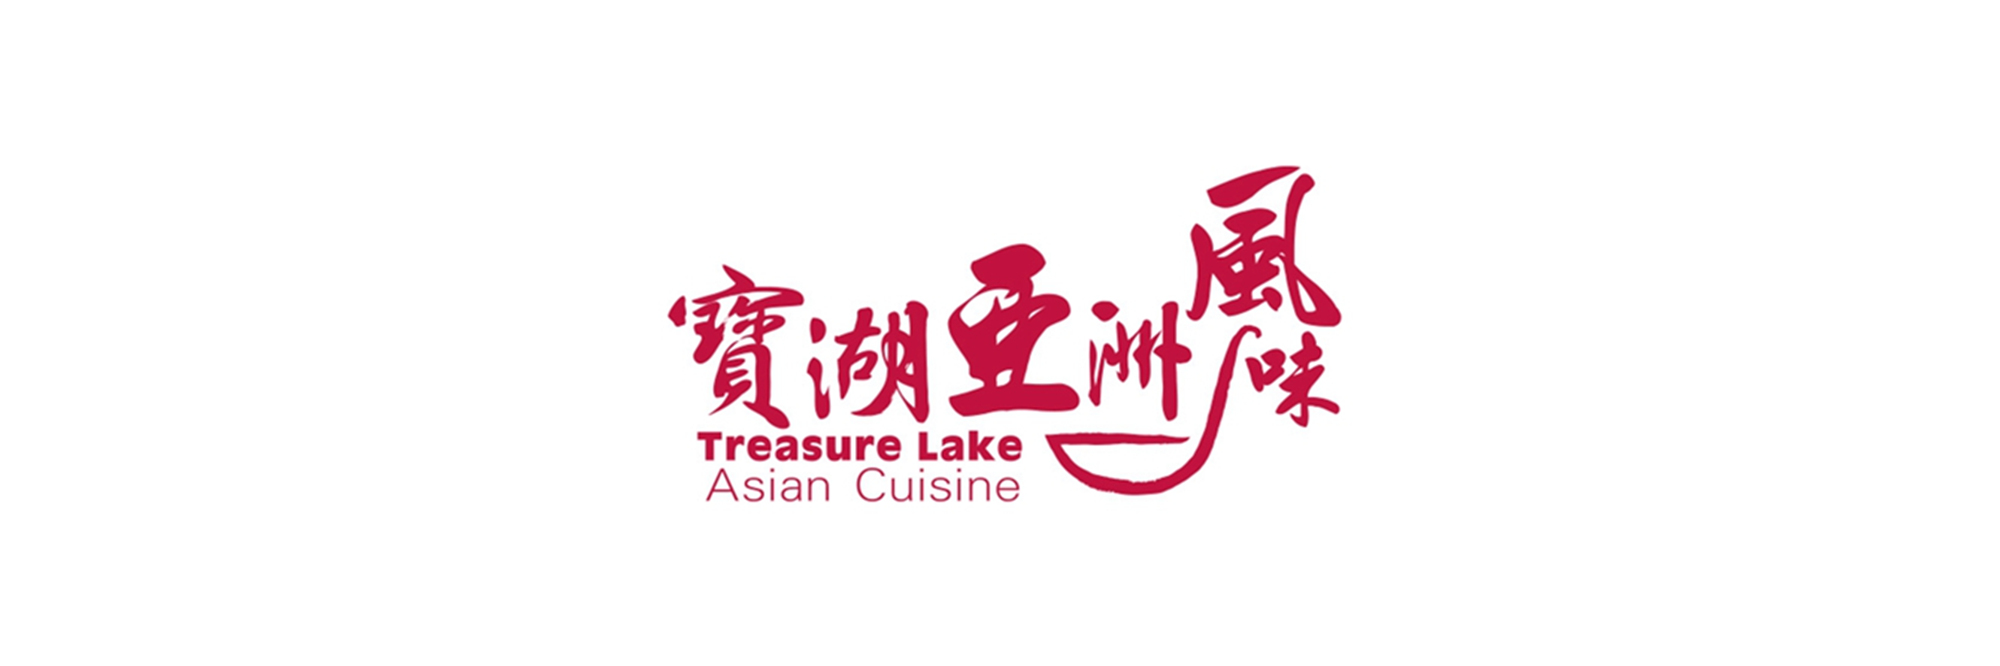 Treasure Lake Asian Cuisine